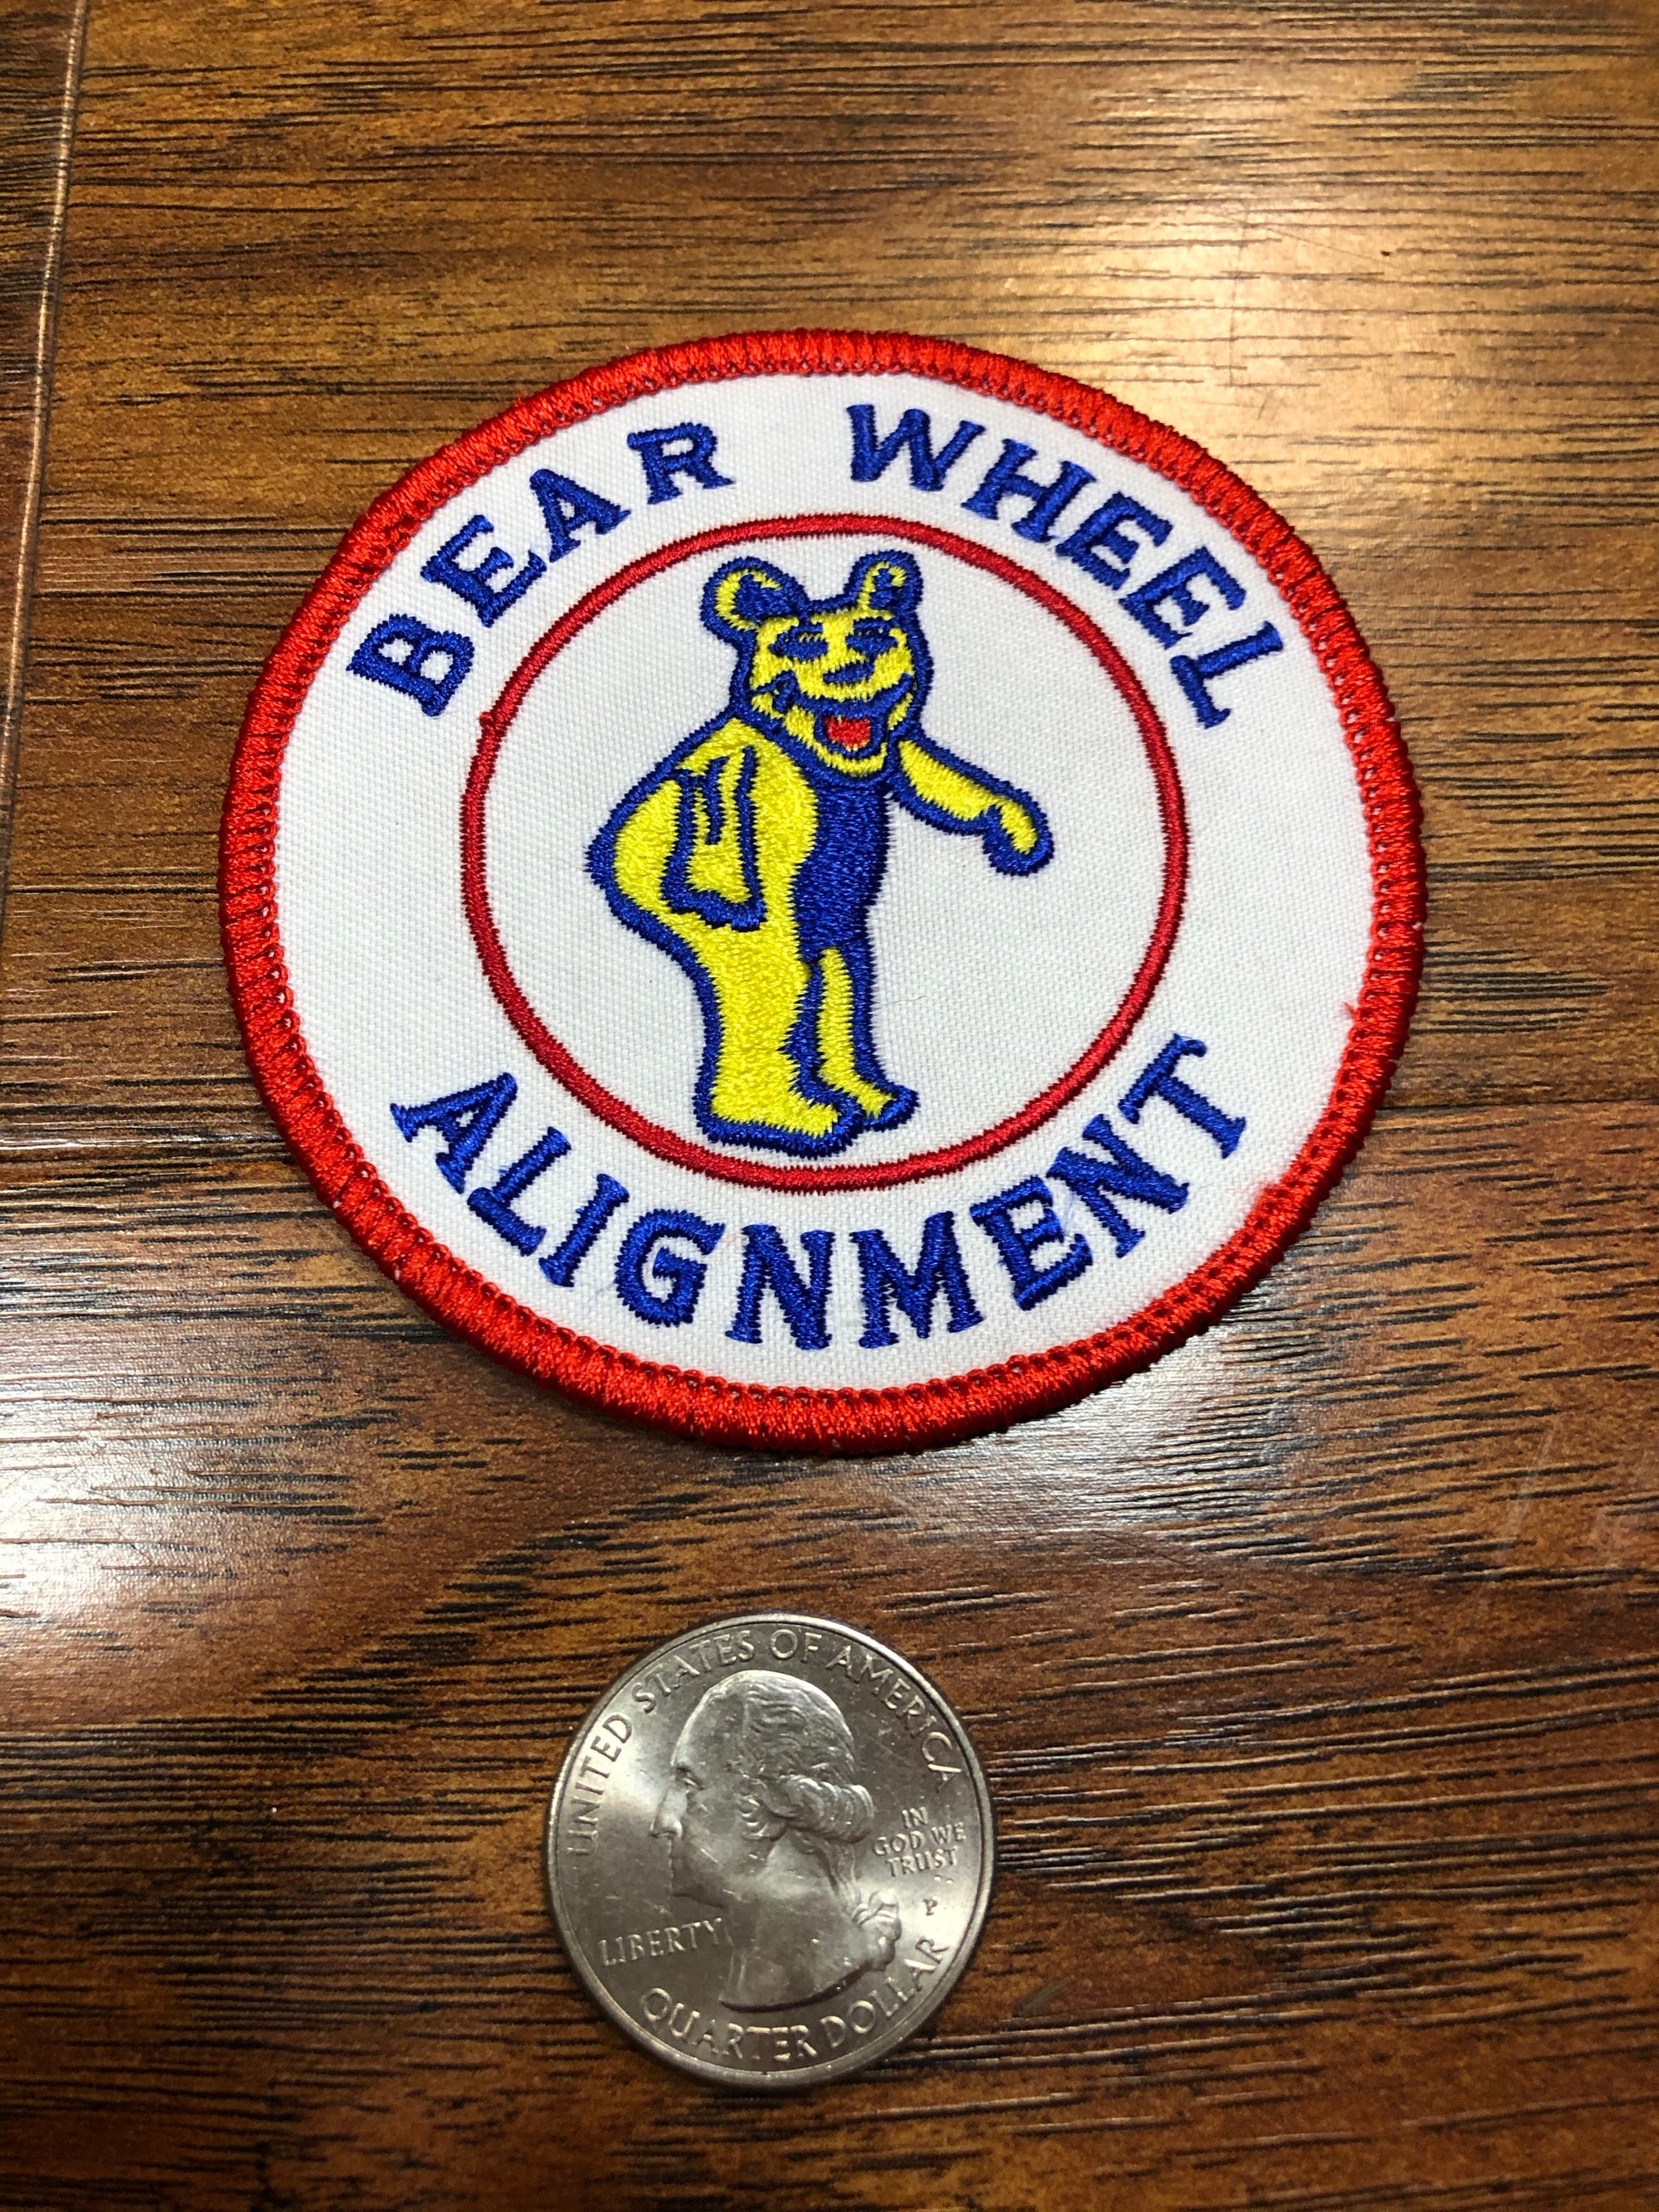 Bear Wheel Alignment